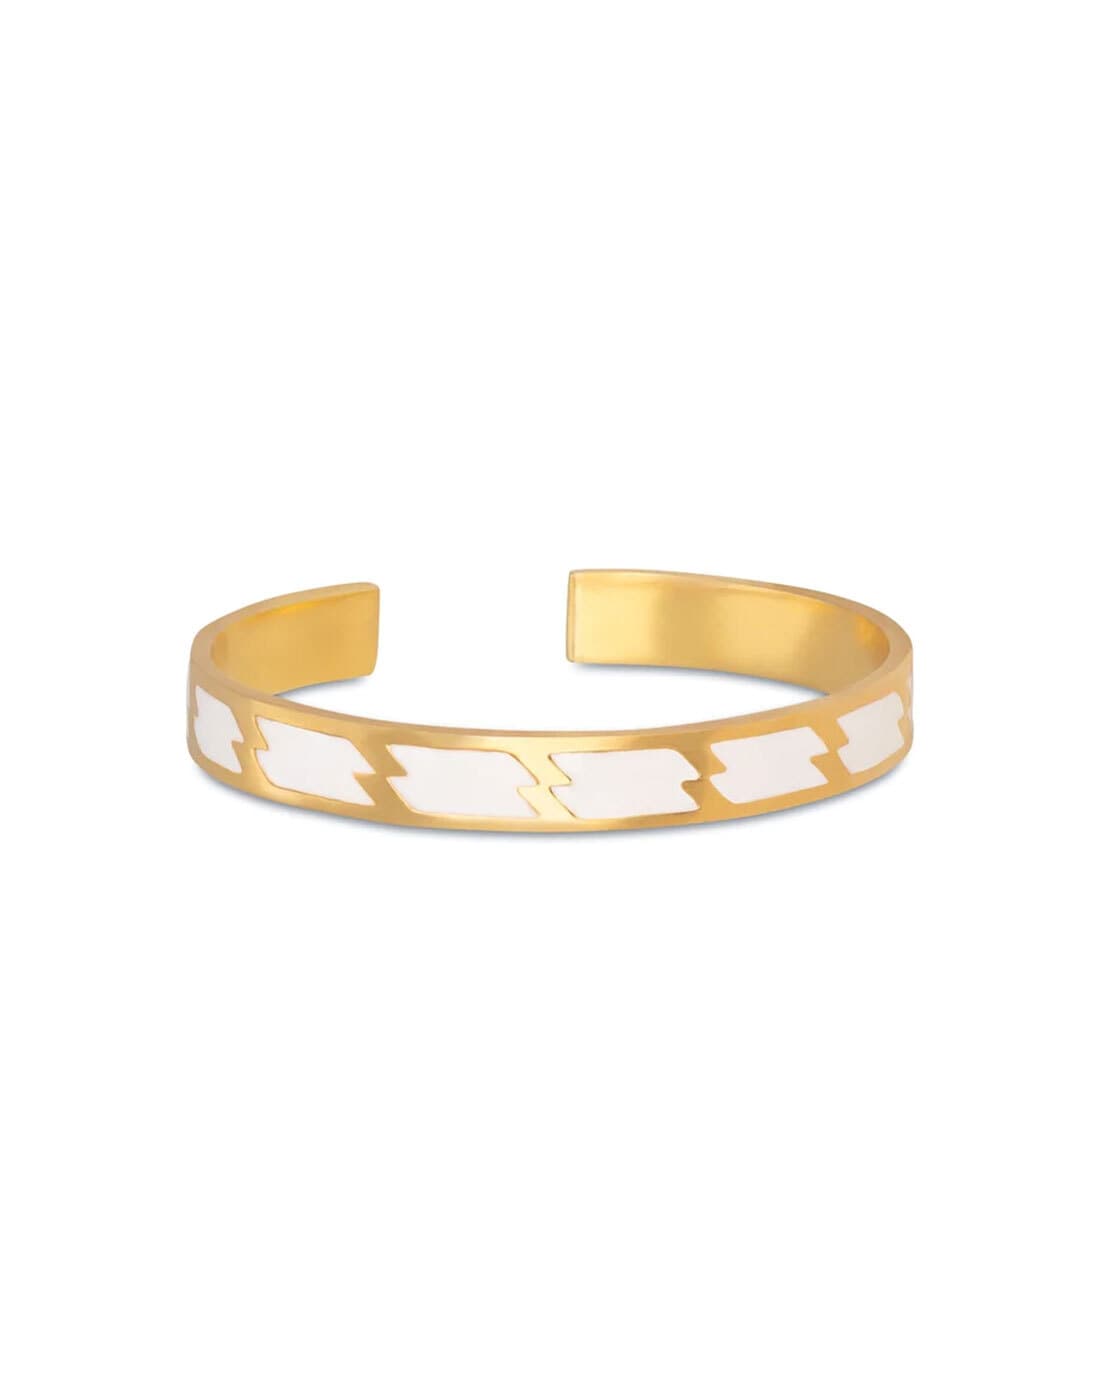 Silhouette Cuff Bracelet in 14K Yellow Gold Vermeil